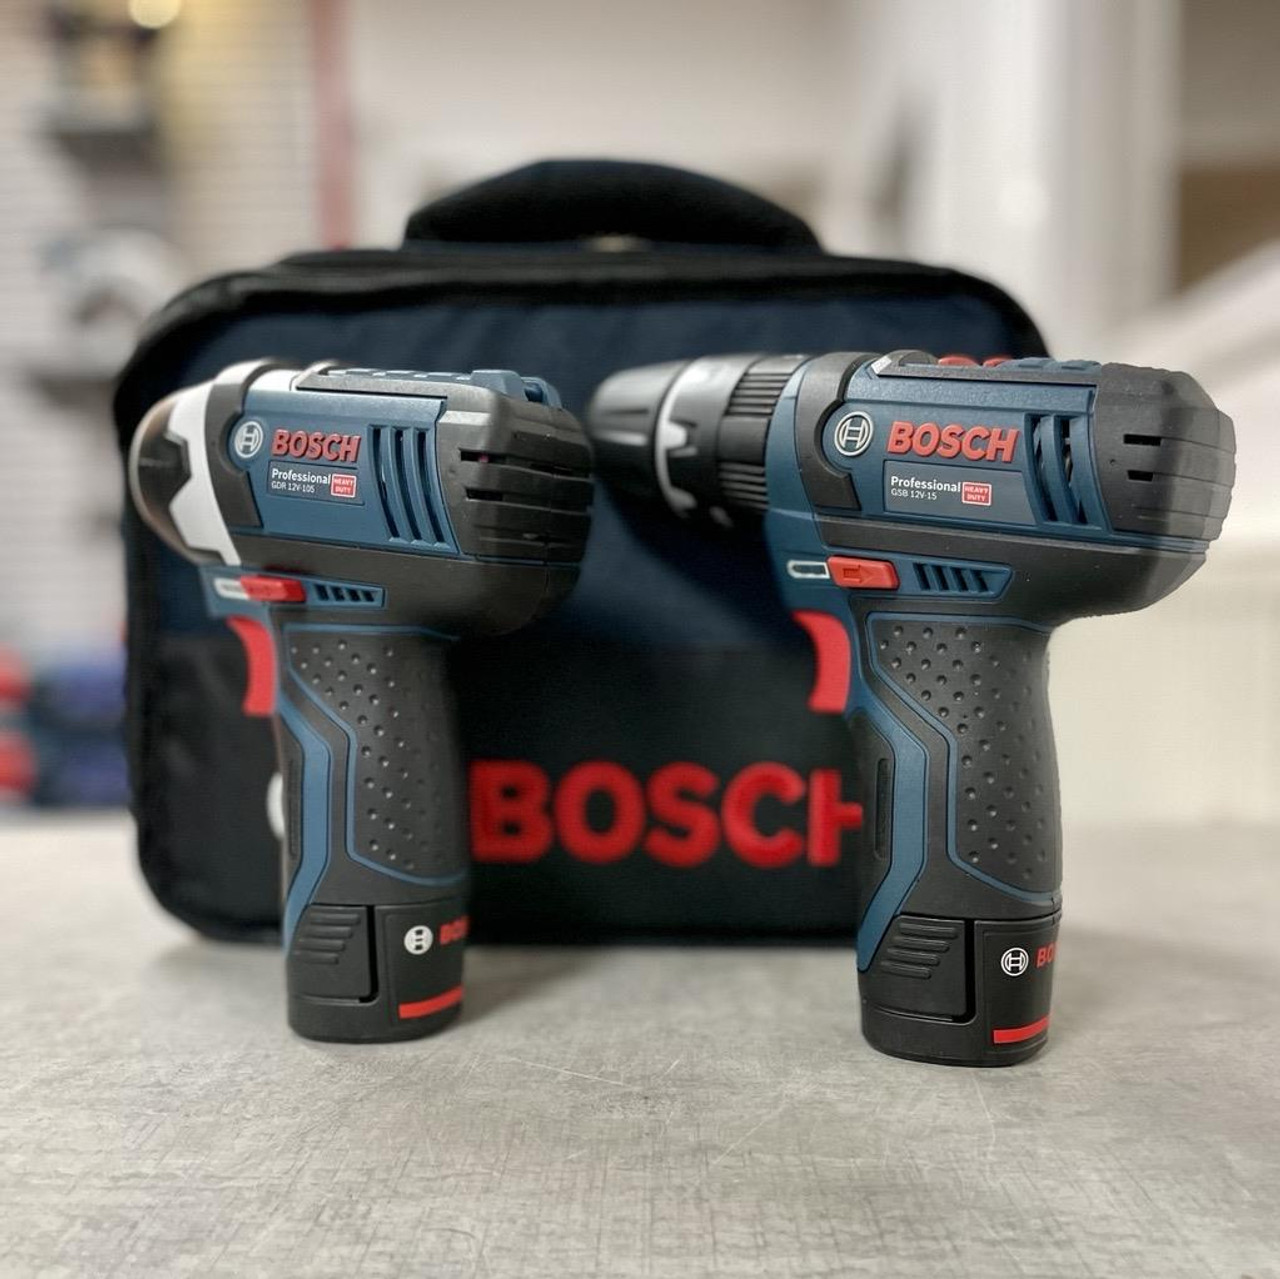 Bosch 12v Twin Pack GSB Combi Hammer Drill + GDR Impact Driver